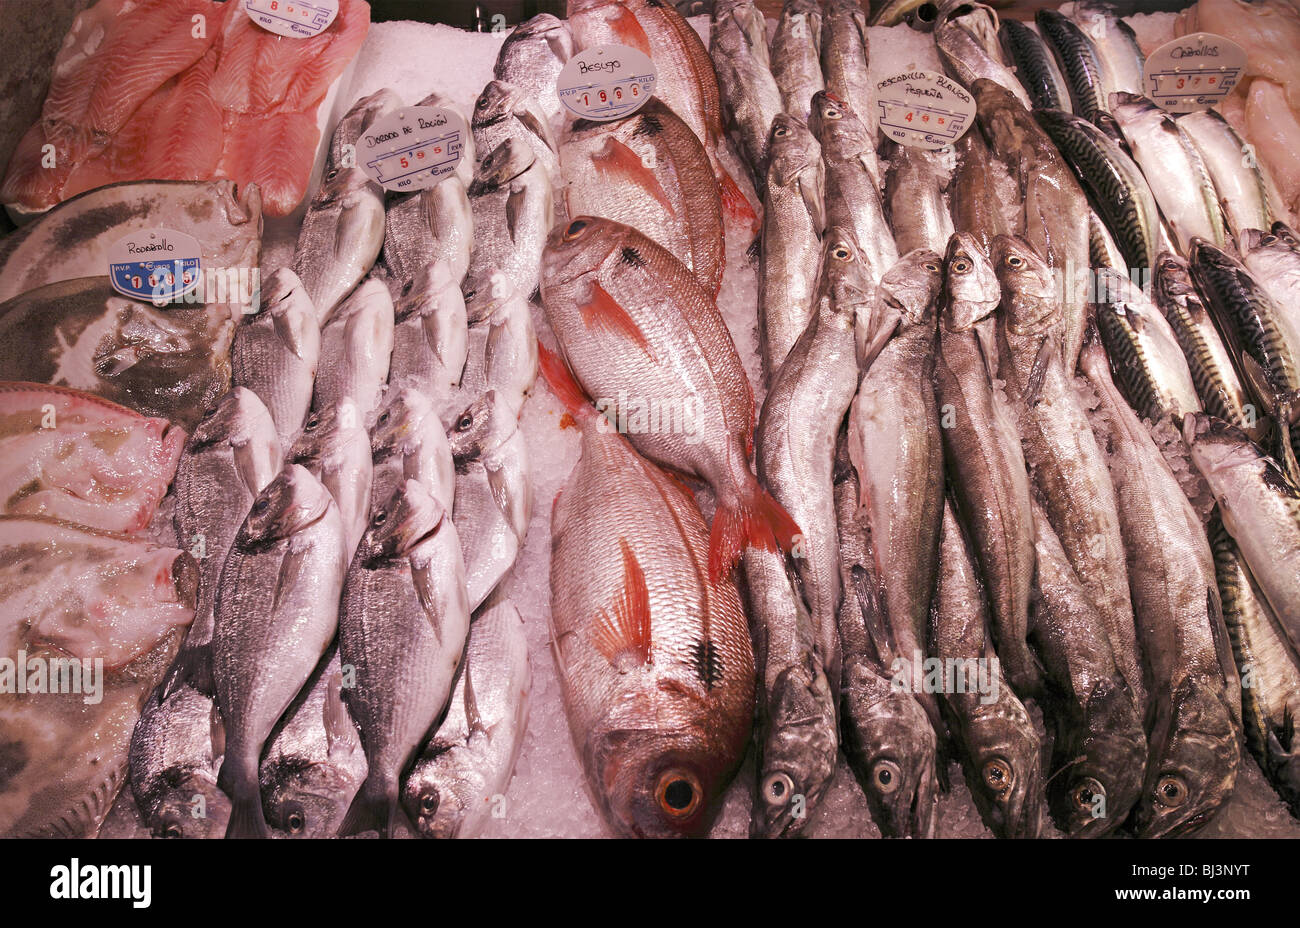 Seafood, local market in Aranjuez, Spain Stock Photo